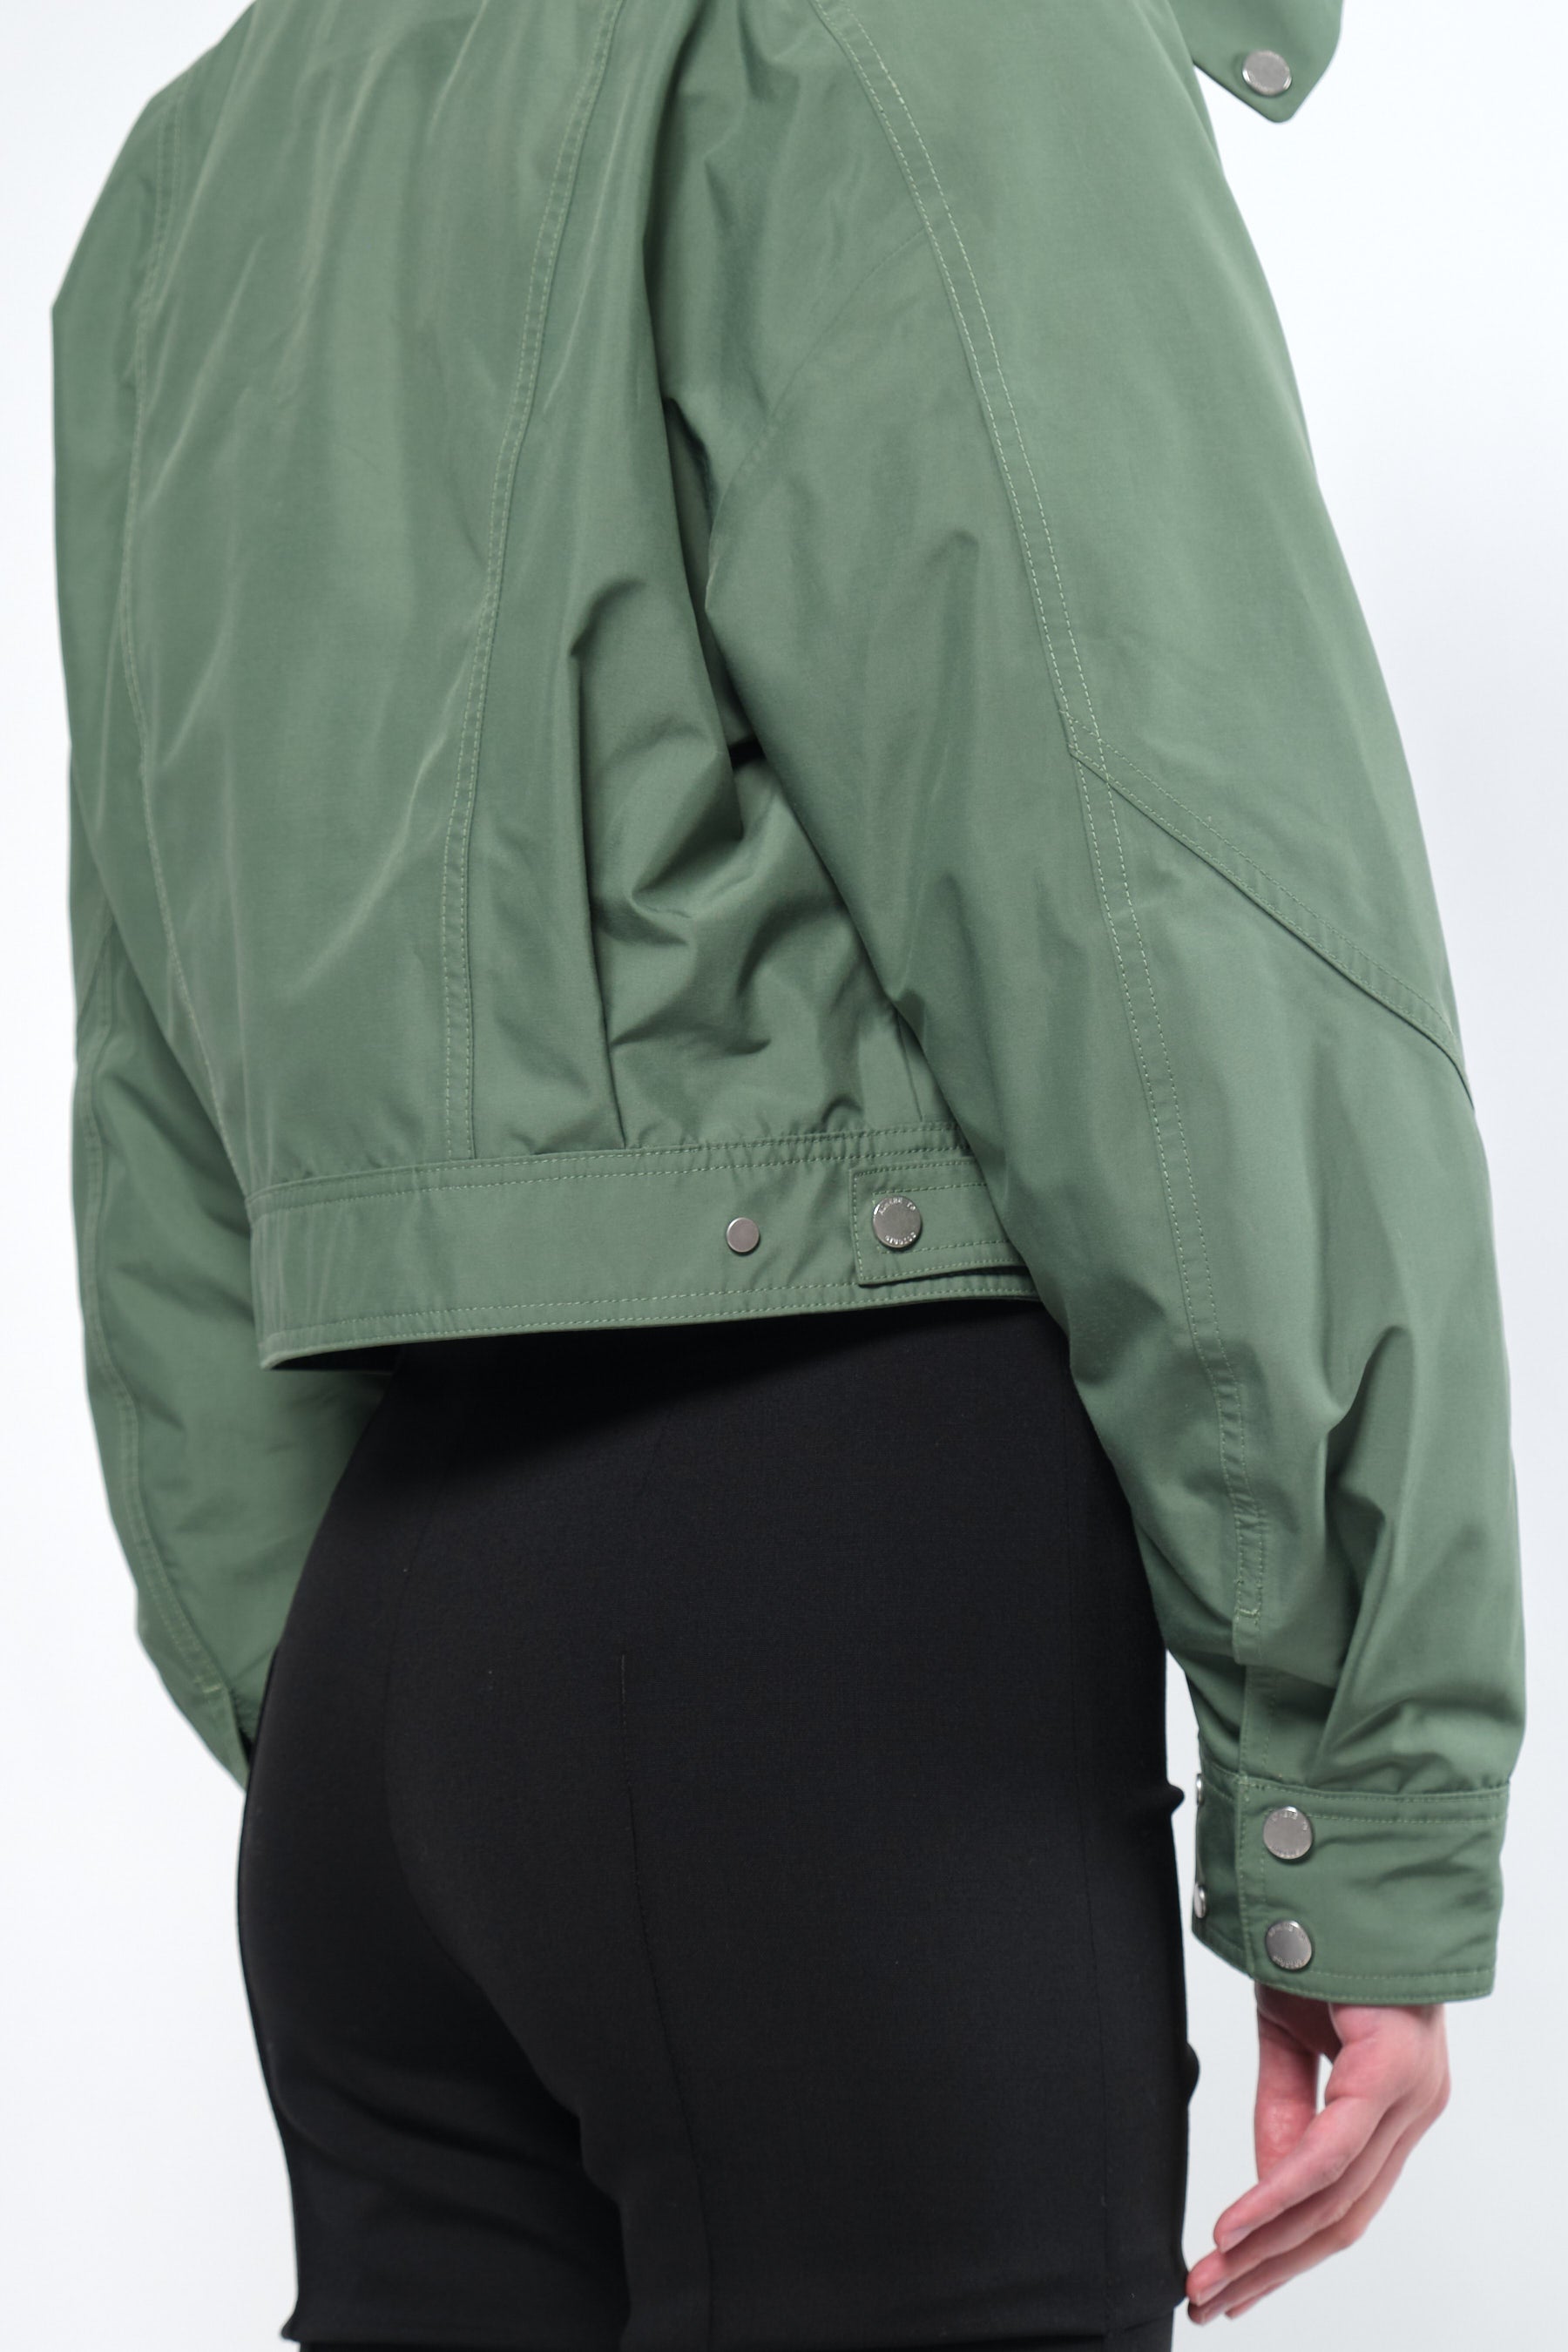  3L Green Waterproof Crop Rain Jacket with Hood - Adhere To  - 9